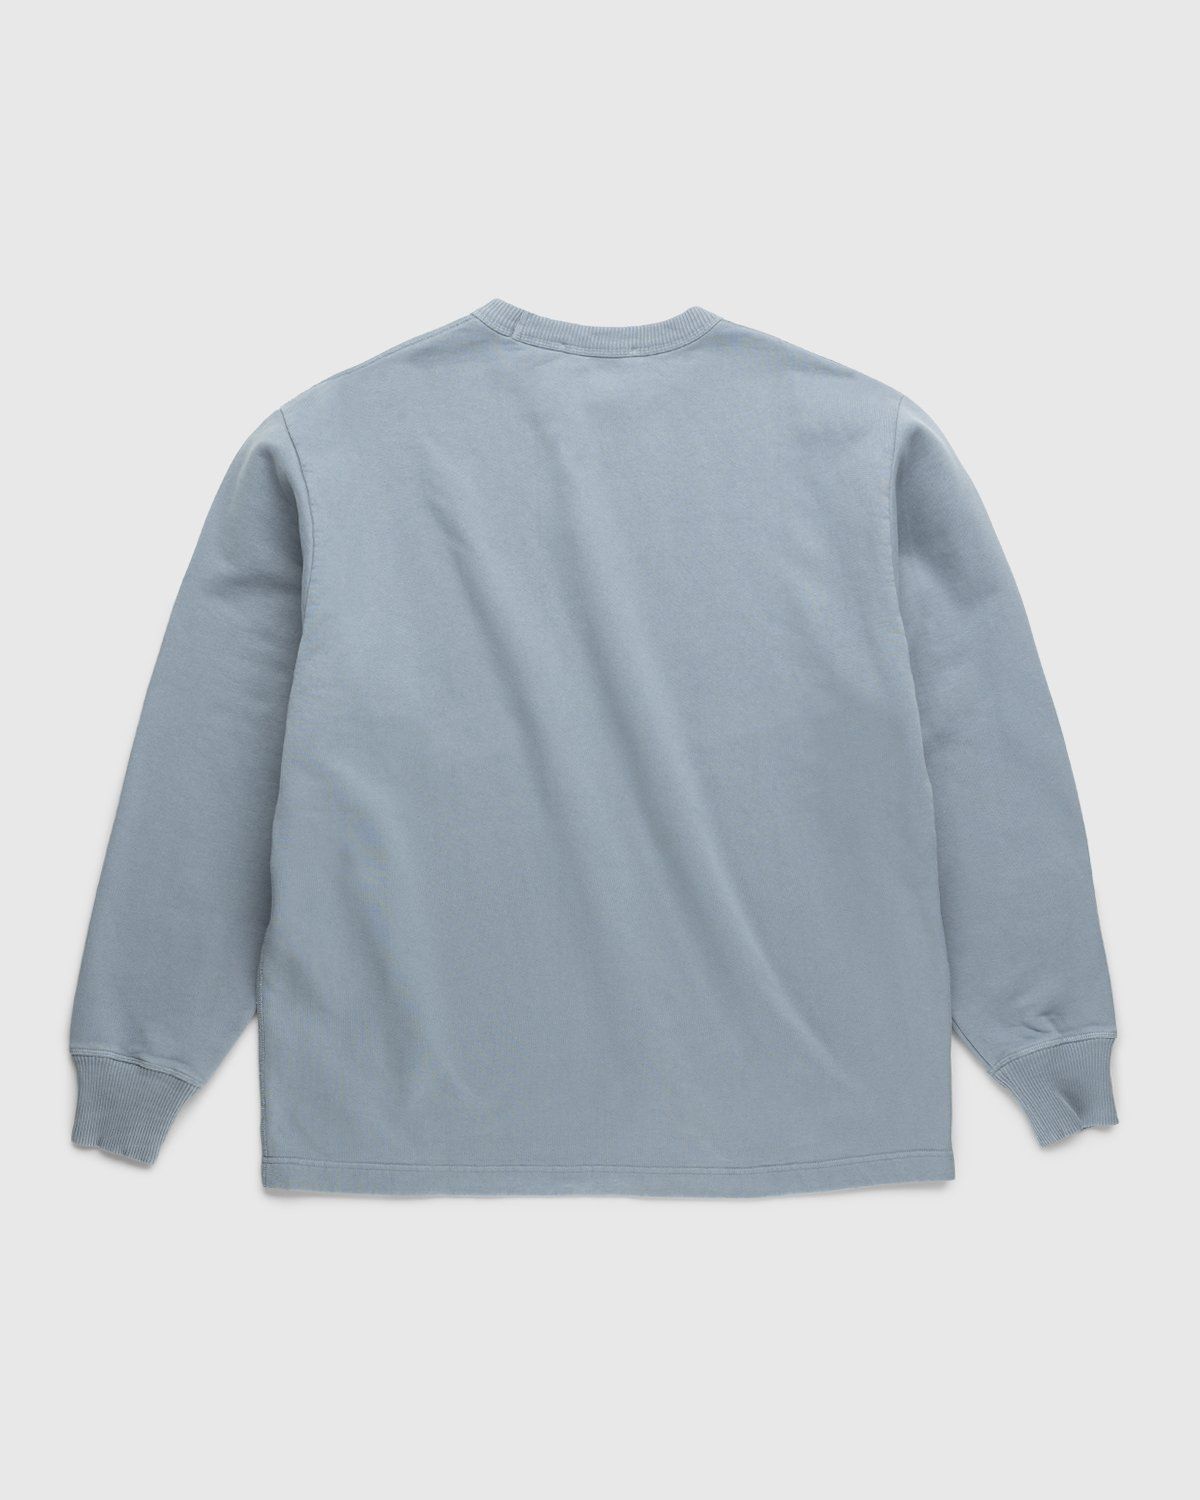 Acne Studios – Organic Cotton Crewneck Sweatshirt Steel Grey - Sweats - Grey - Image 2